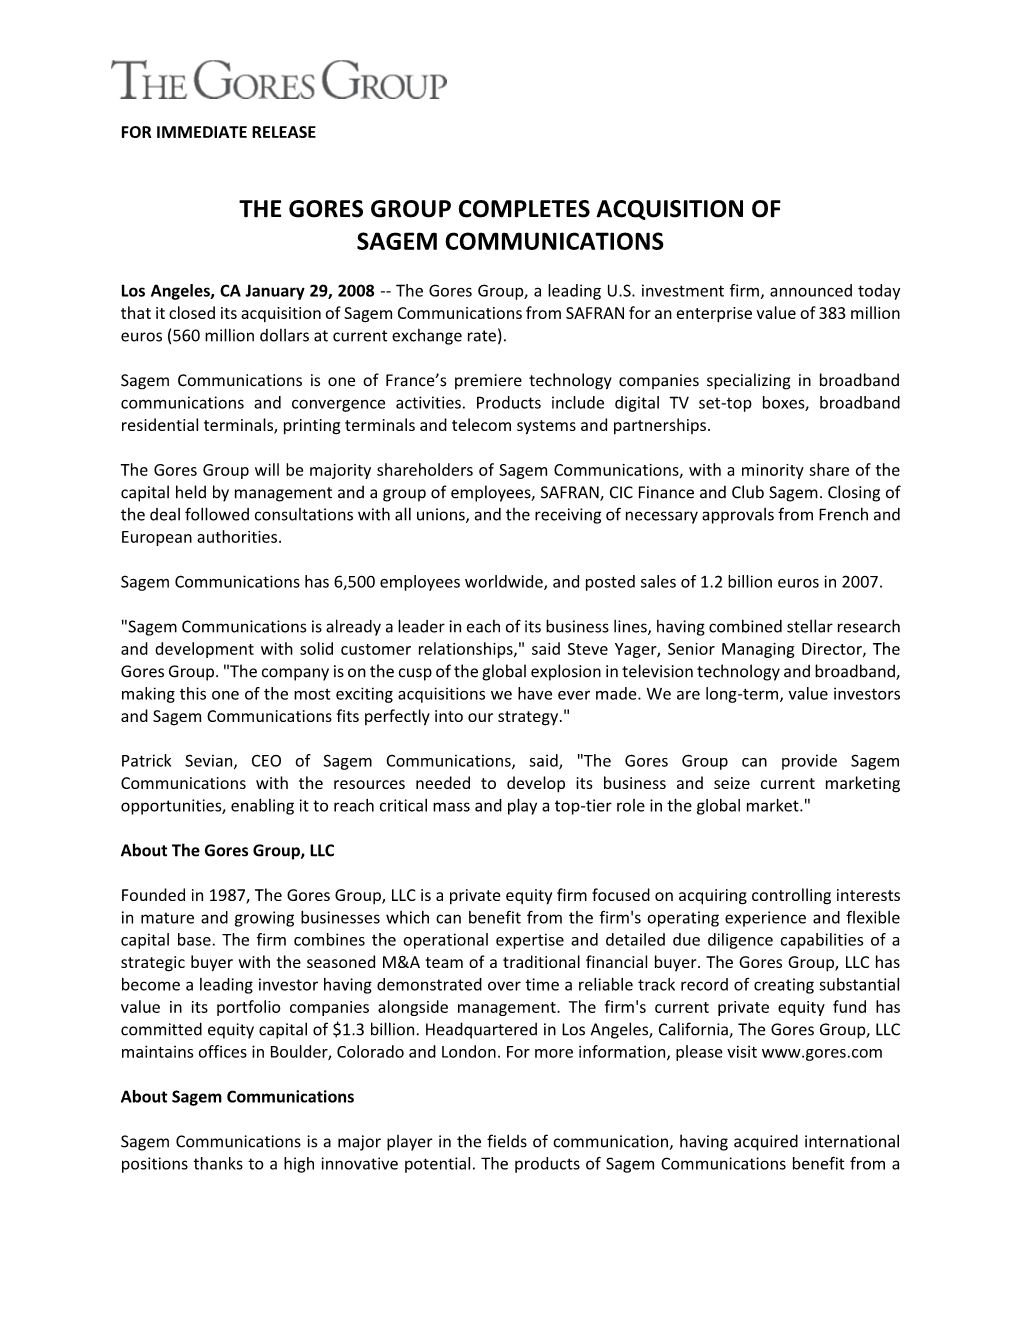 The Gores Group Completes Acquisition of Sagem Communications